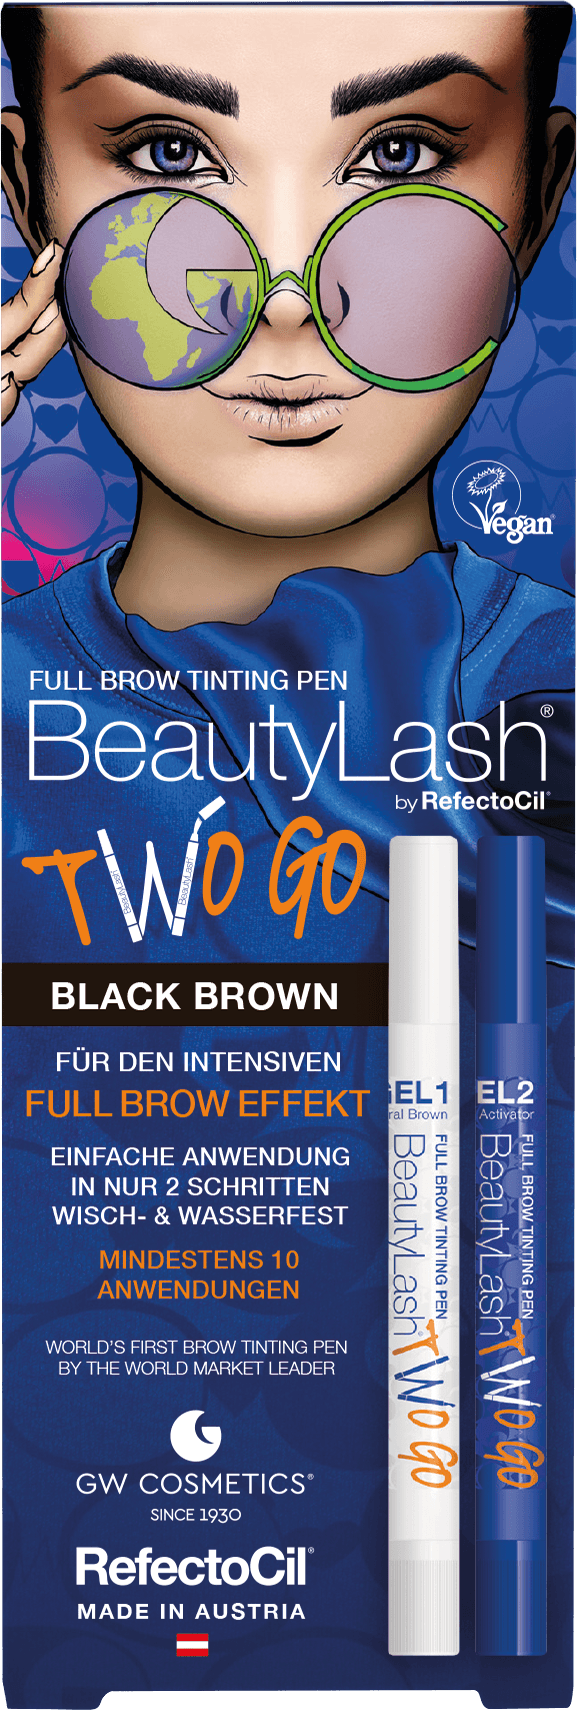 Produktbild von Full Brow Tinting Pen Two Go - Black Brown